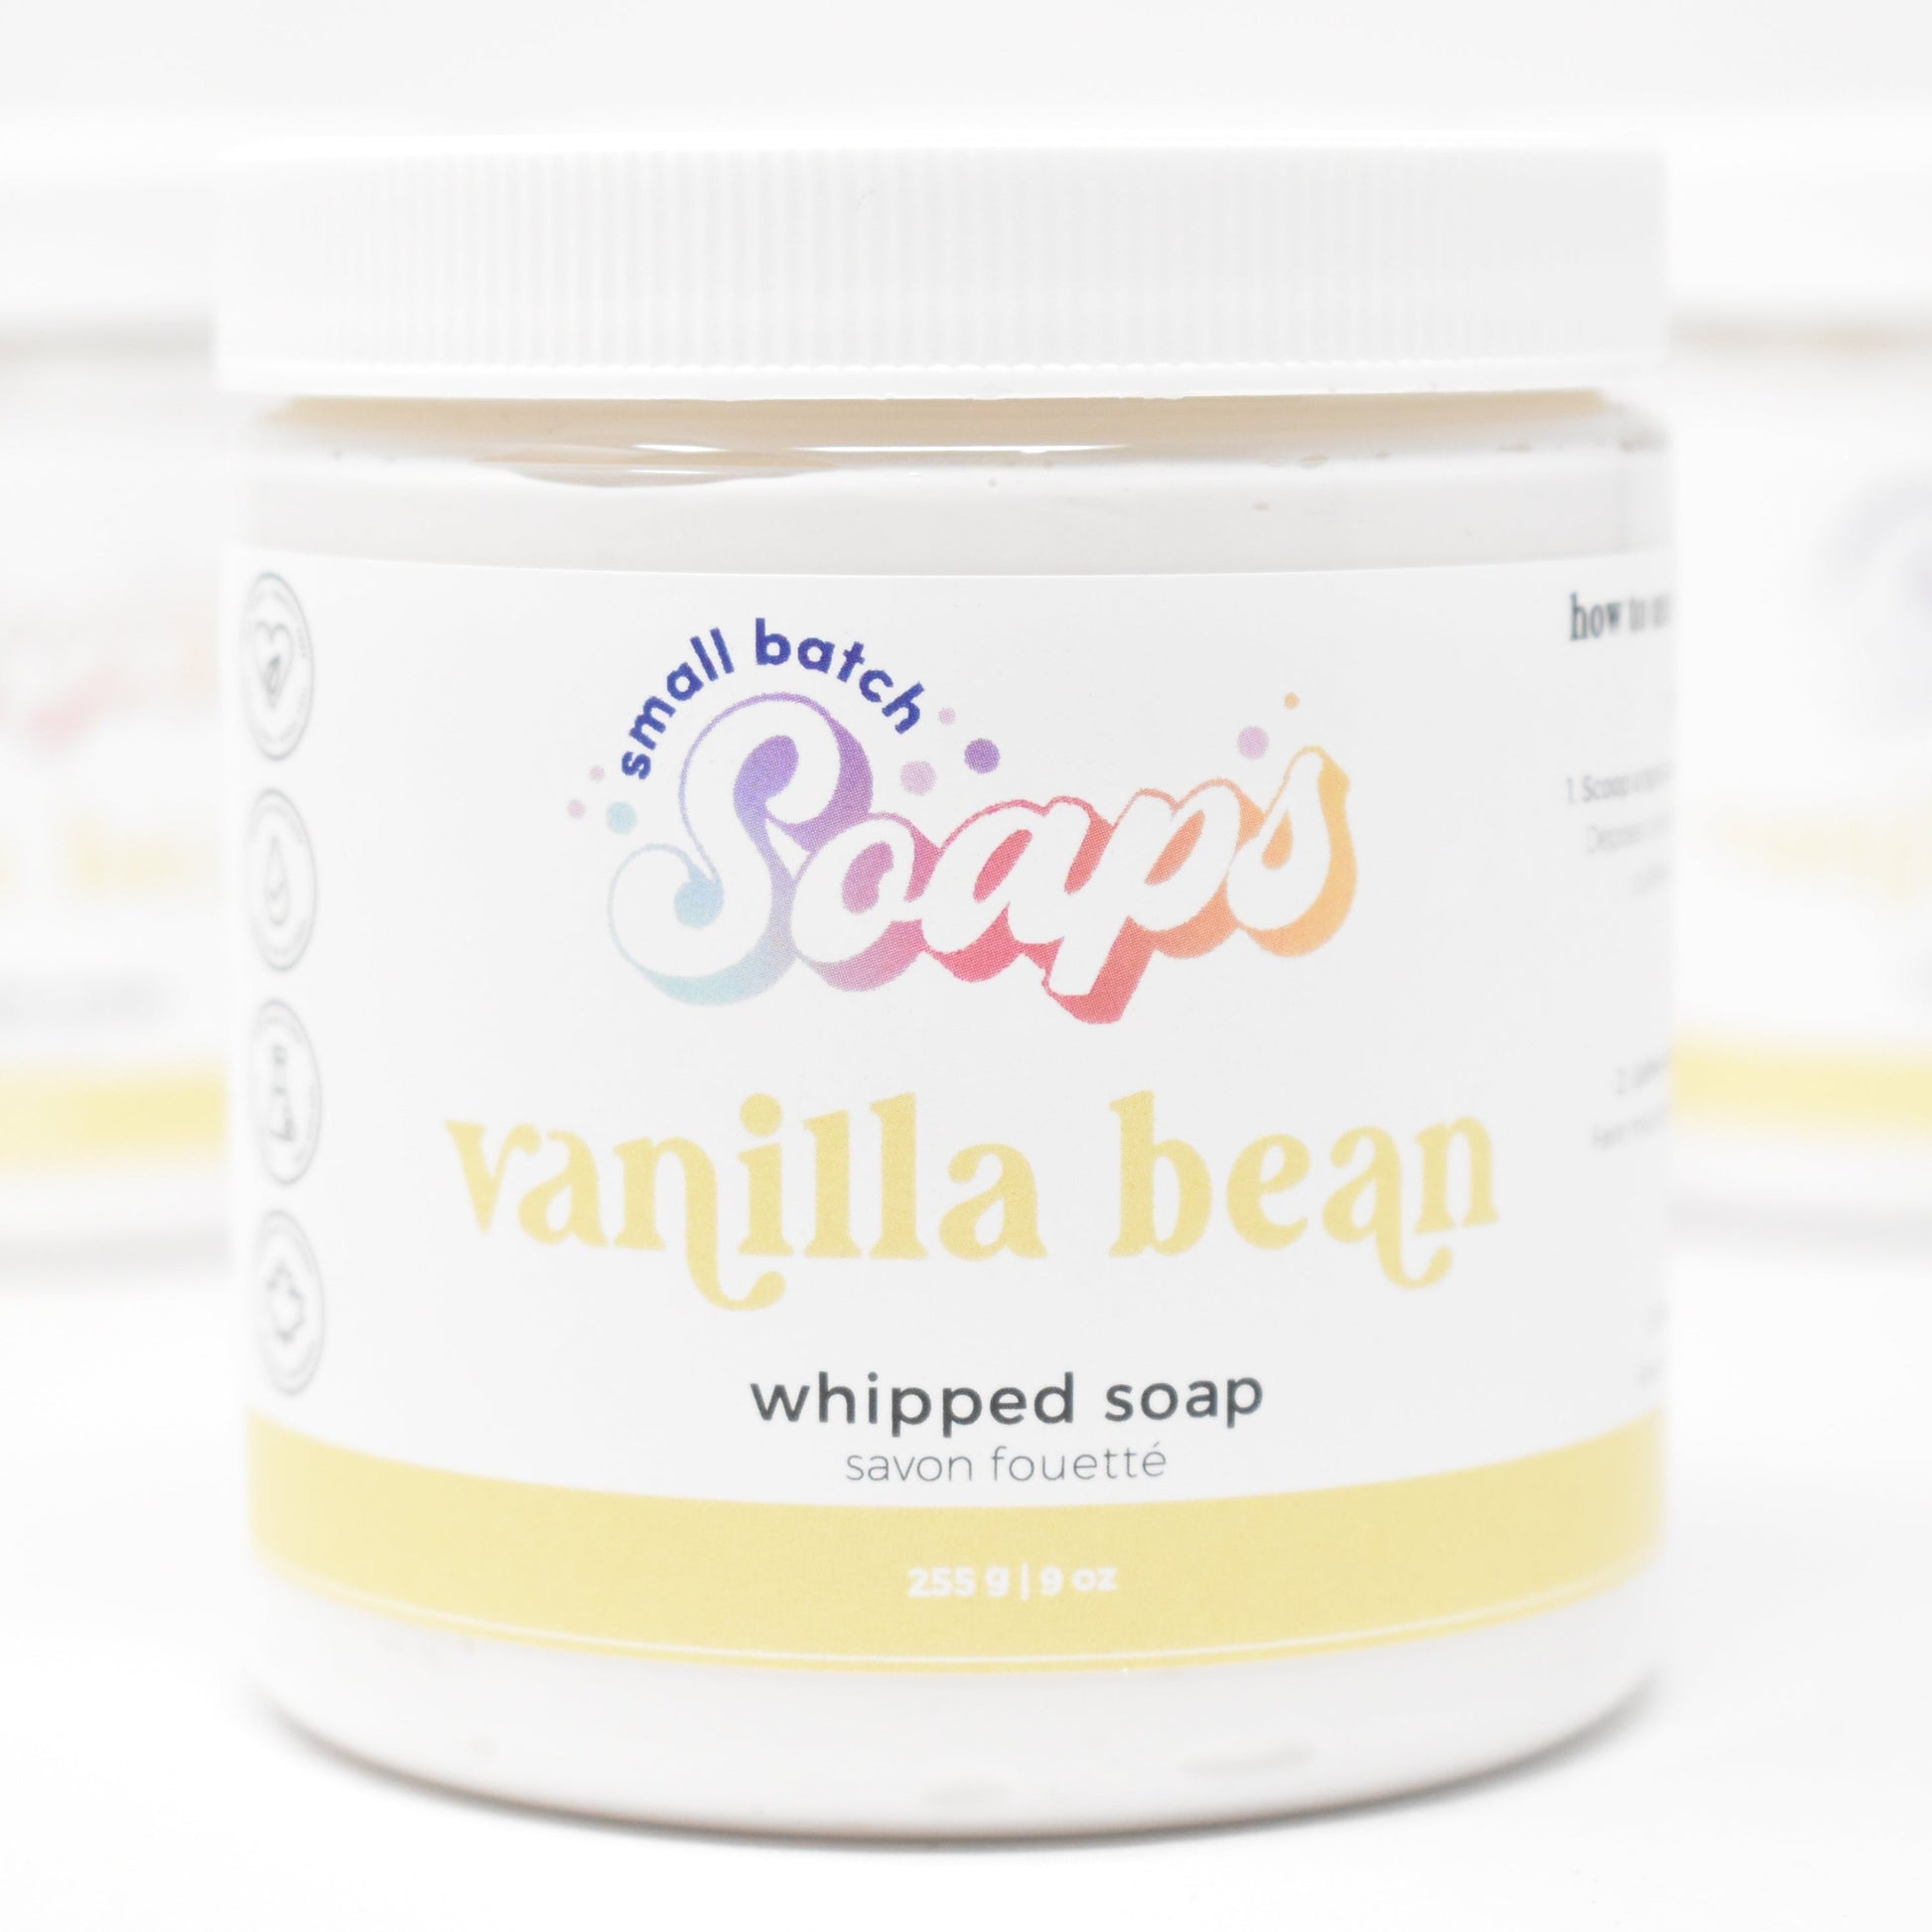 Vanilla Bean Whipped Soap - Small Batch Soaps